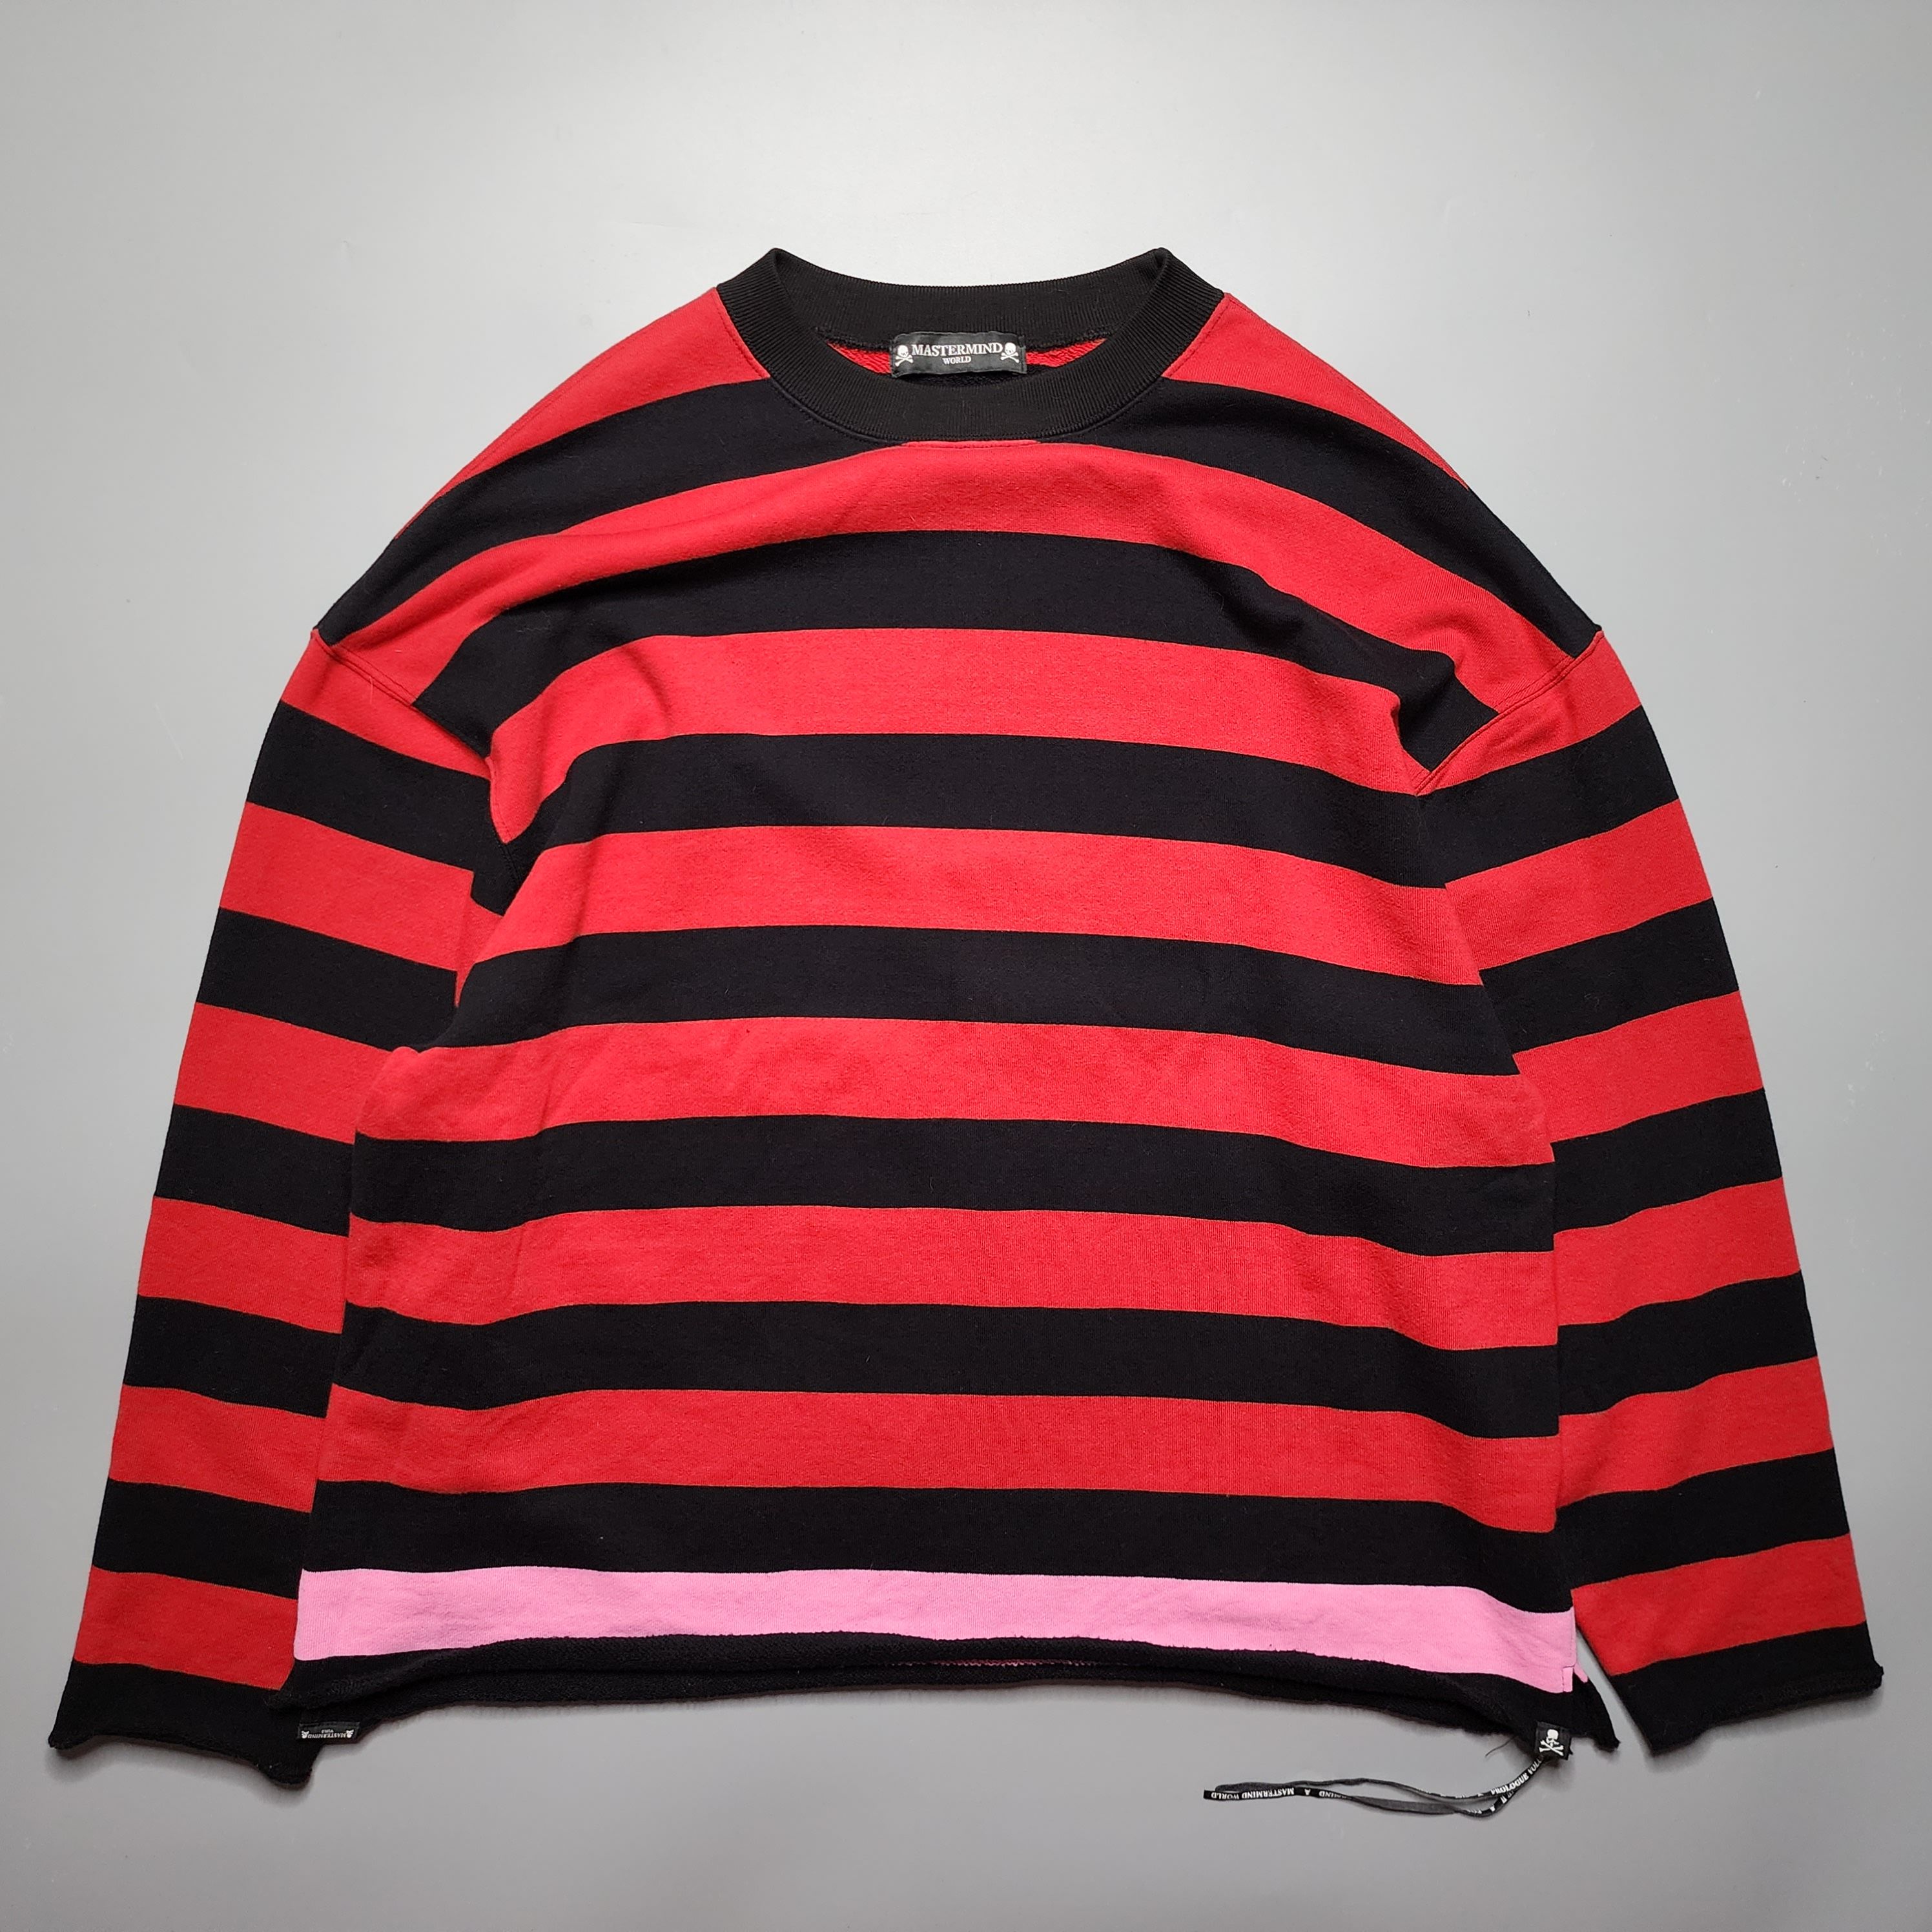 Mastermind World - SS18 Stripe Boxy Oversized Sweatshirt - 2